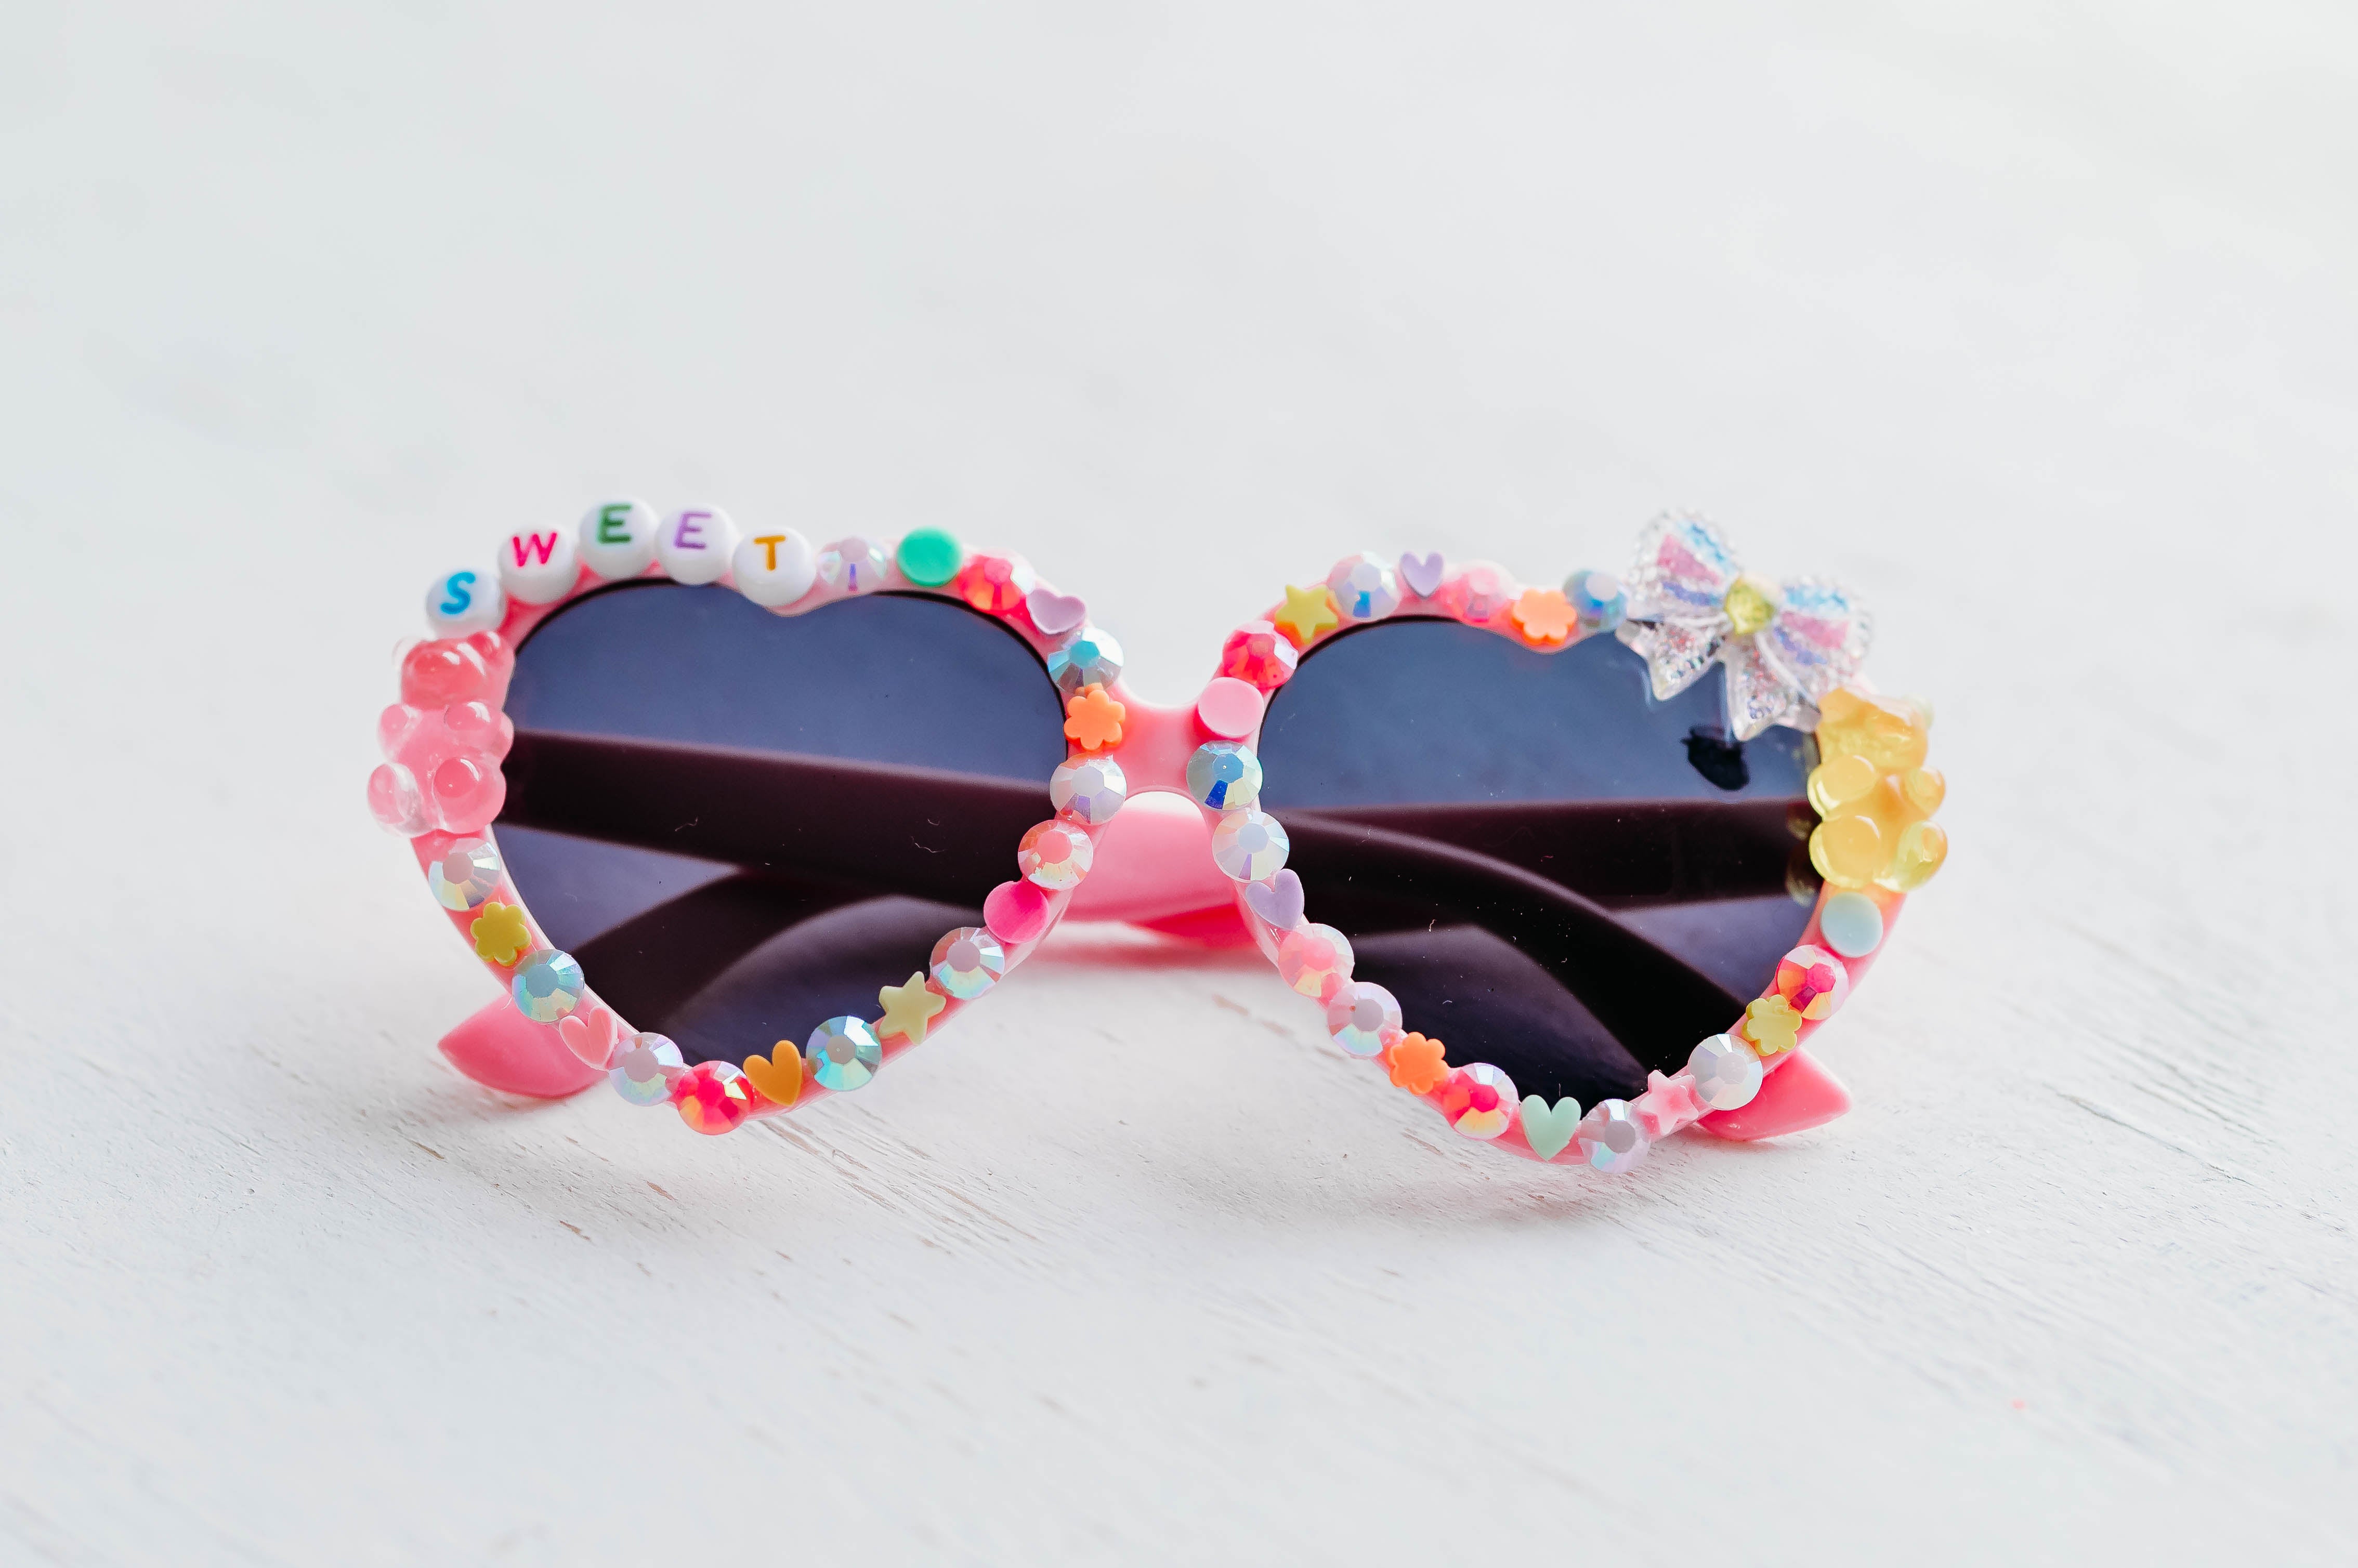 Gummy Bear Sunglasses